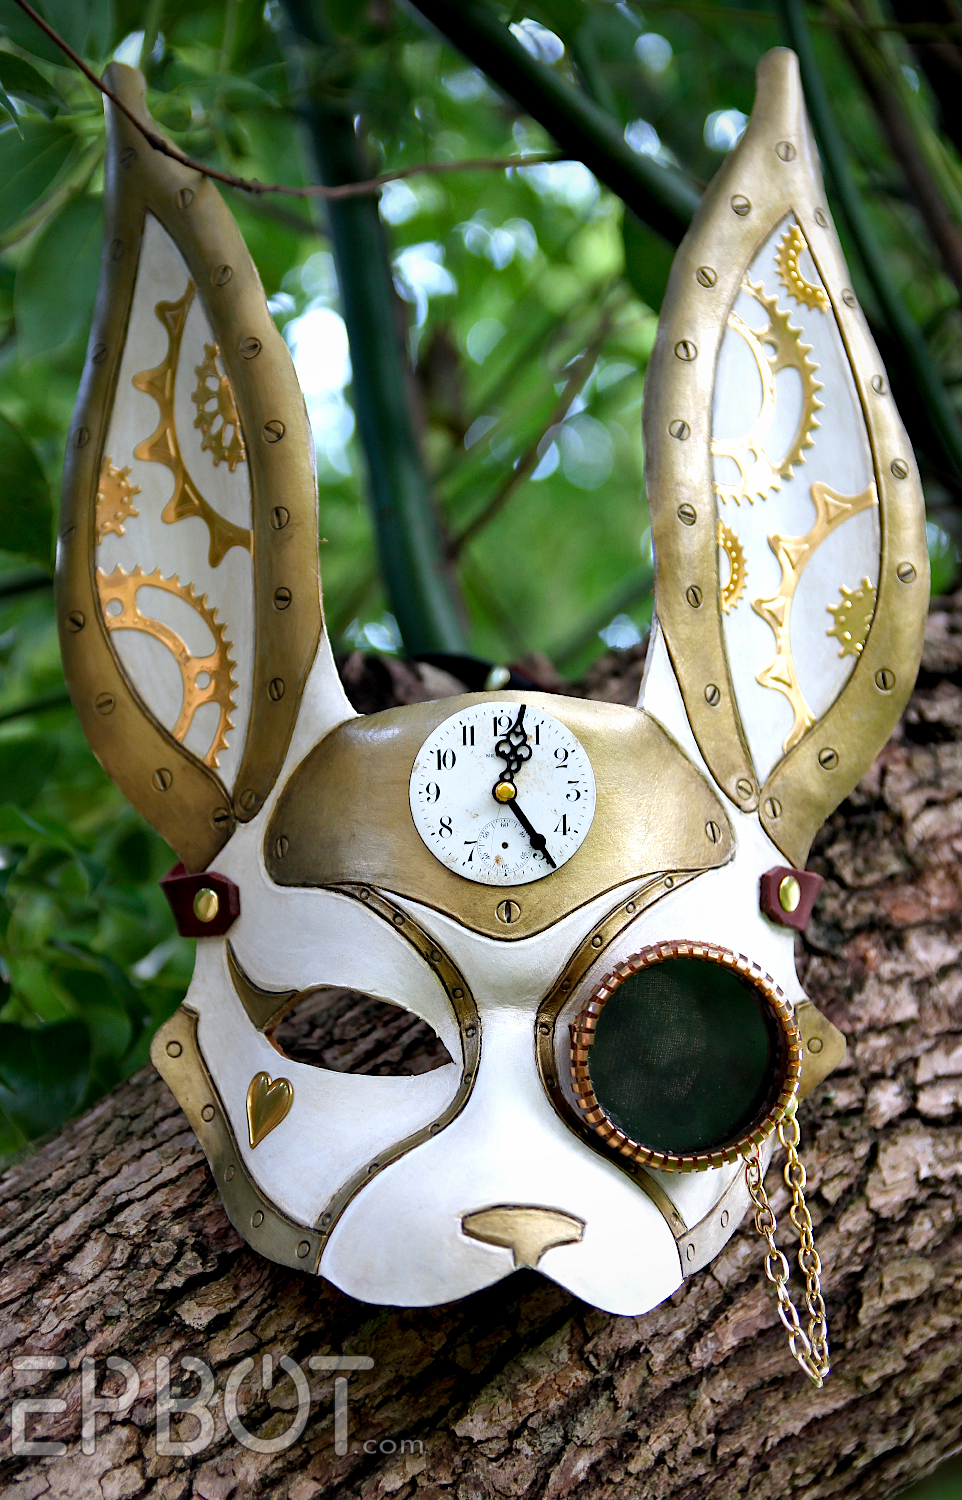 DIY steampunk rabbit mask (via www.epbot.com)